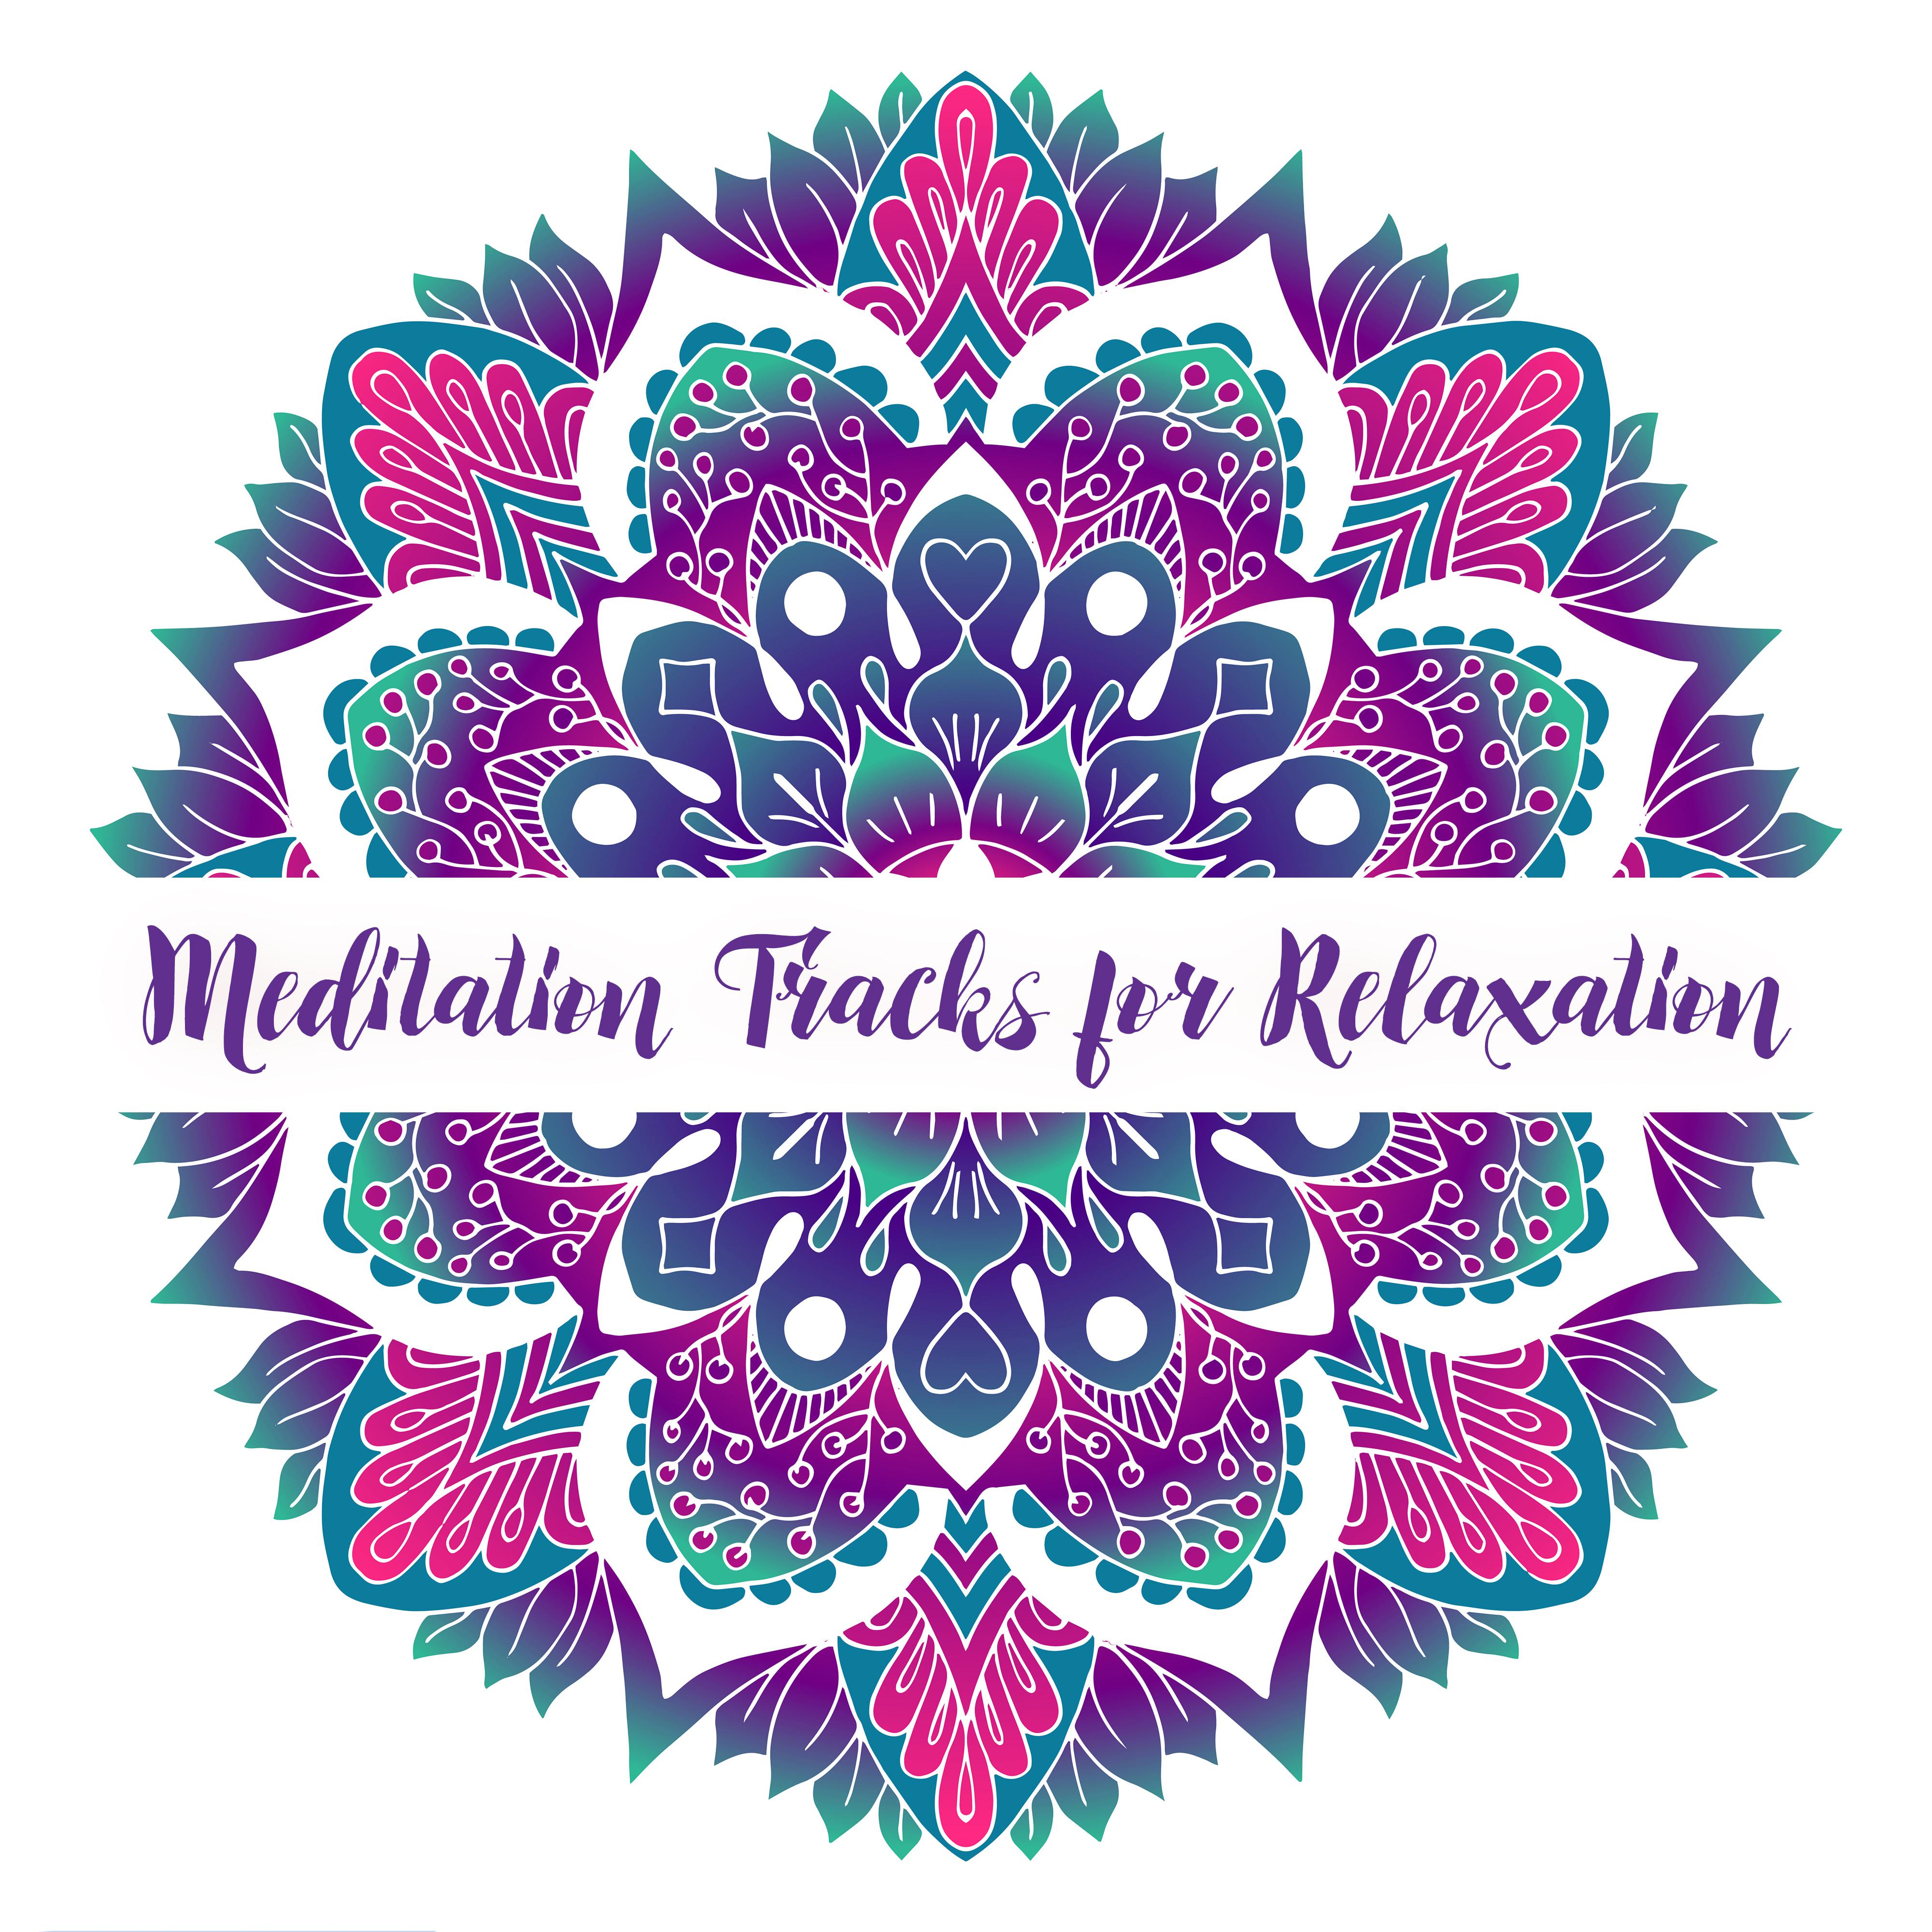 Meditation Tracks for Relaxation